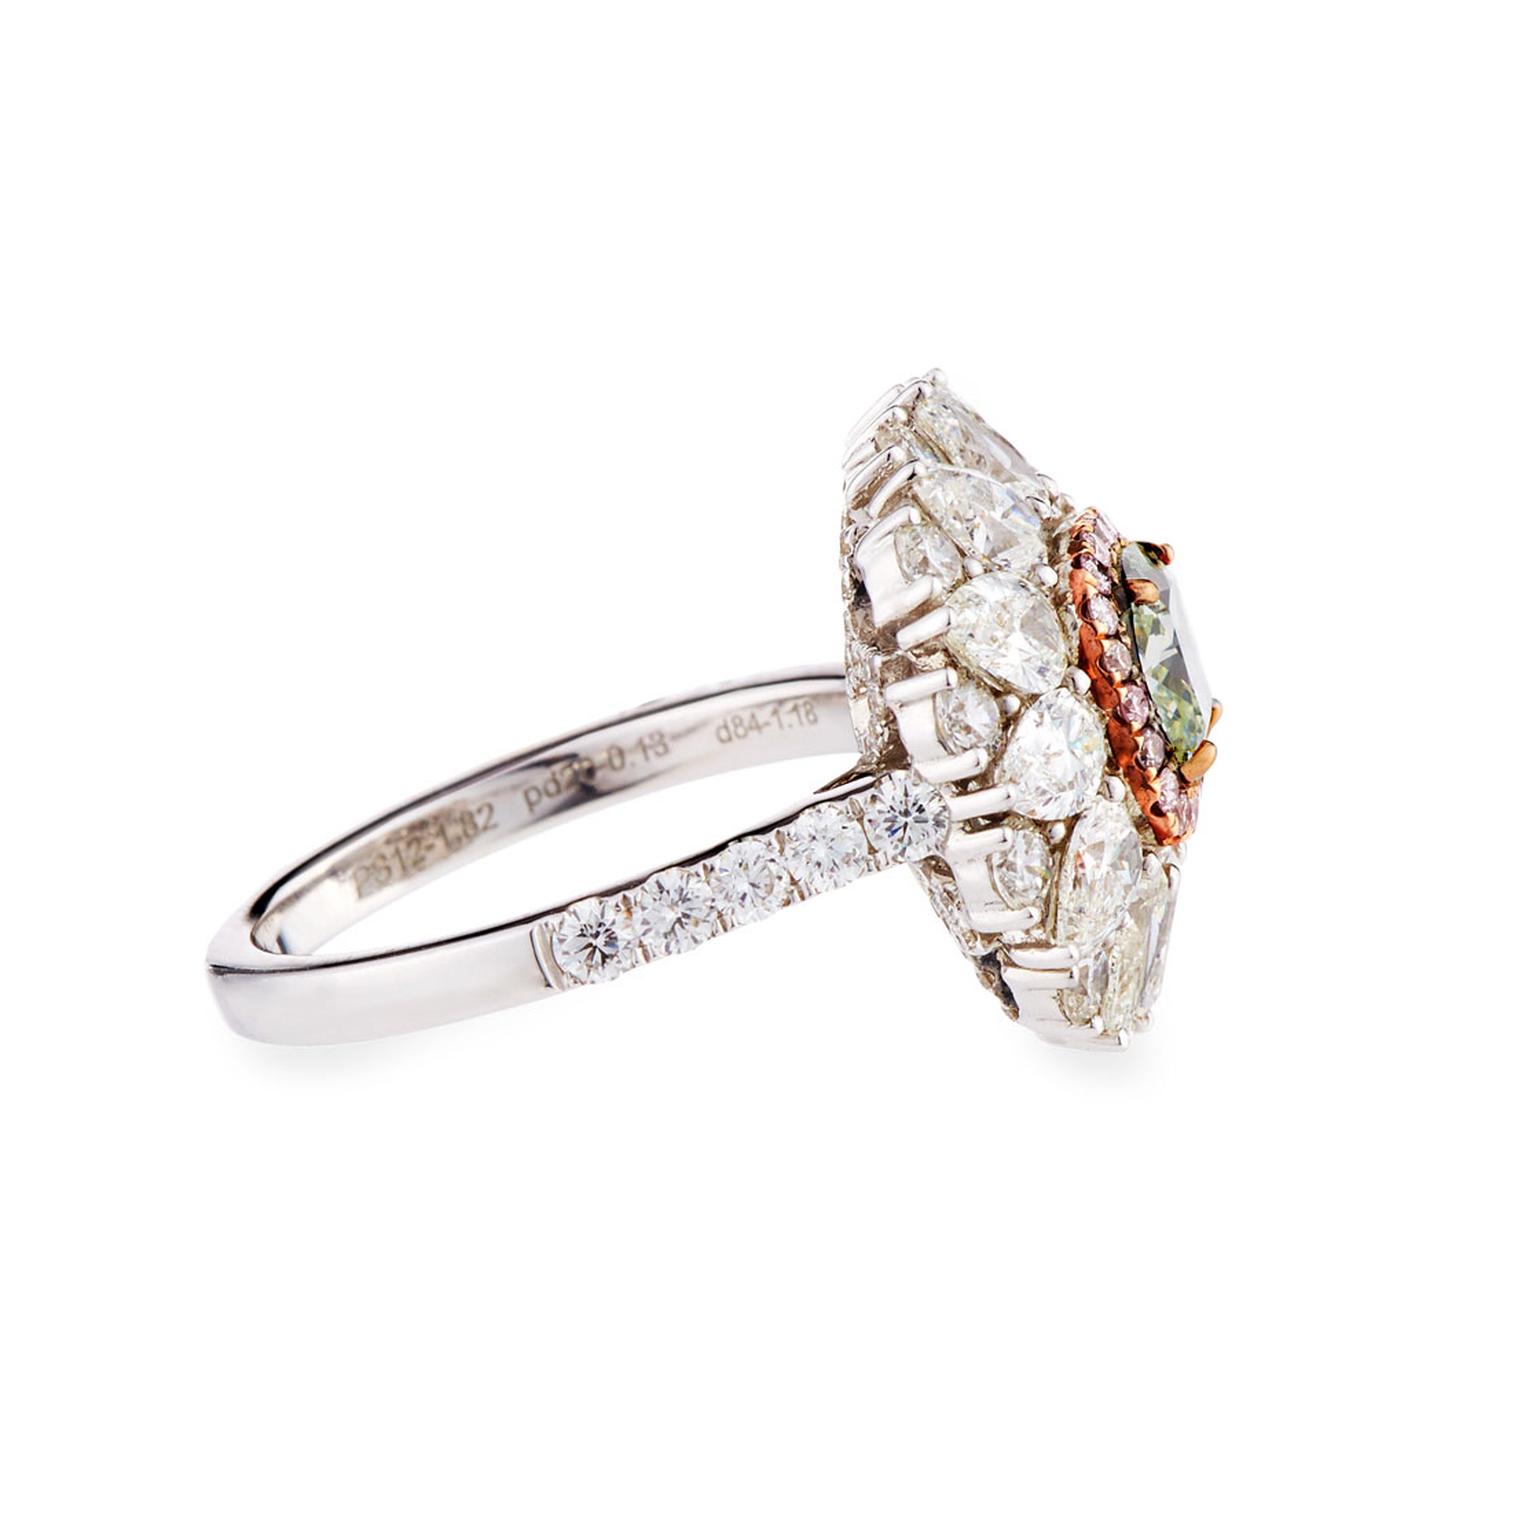 Alexander Laut rare green diamond ring